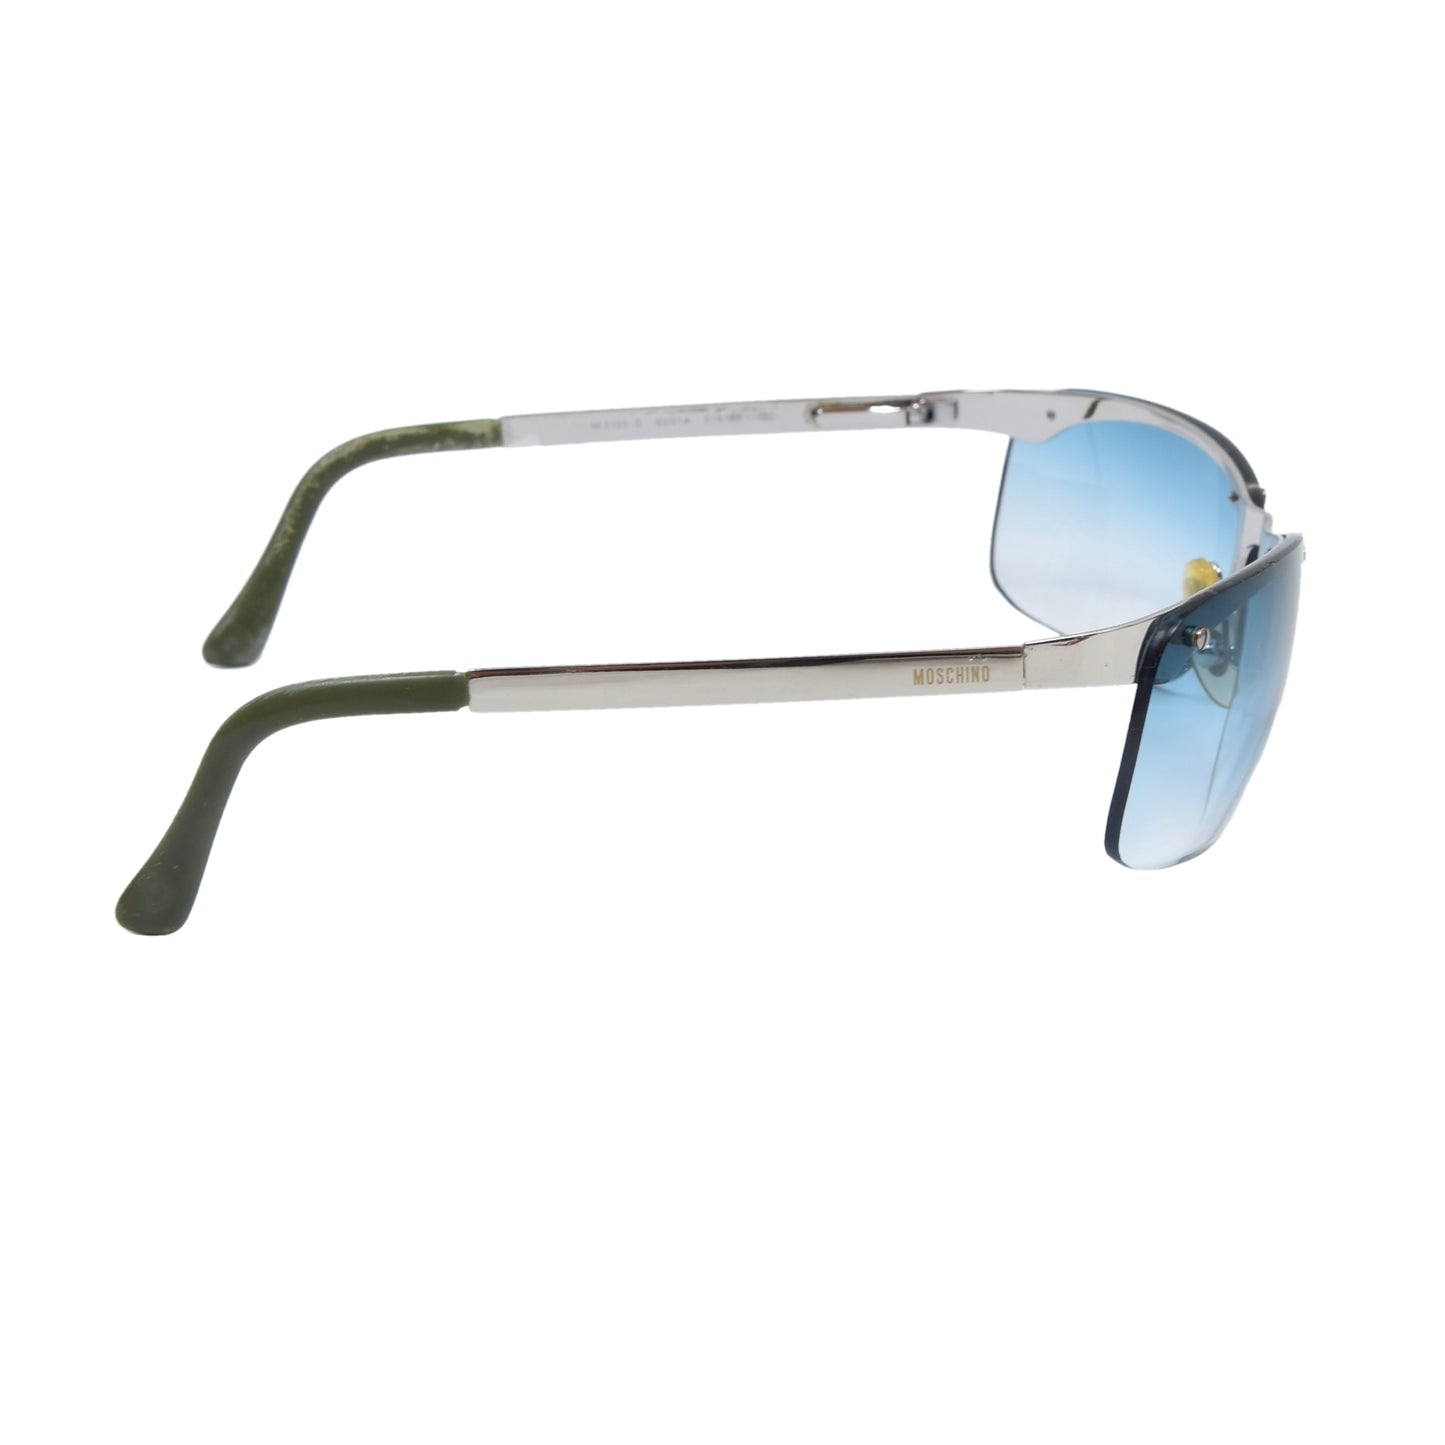 Vintage Moschino Mod. 3155 Sunglasses